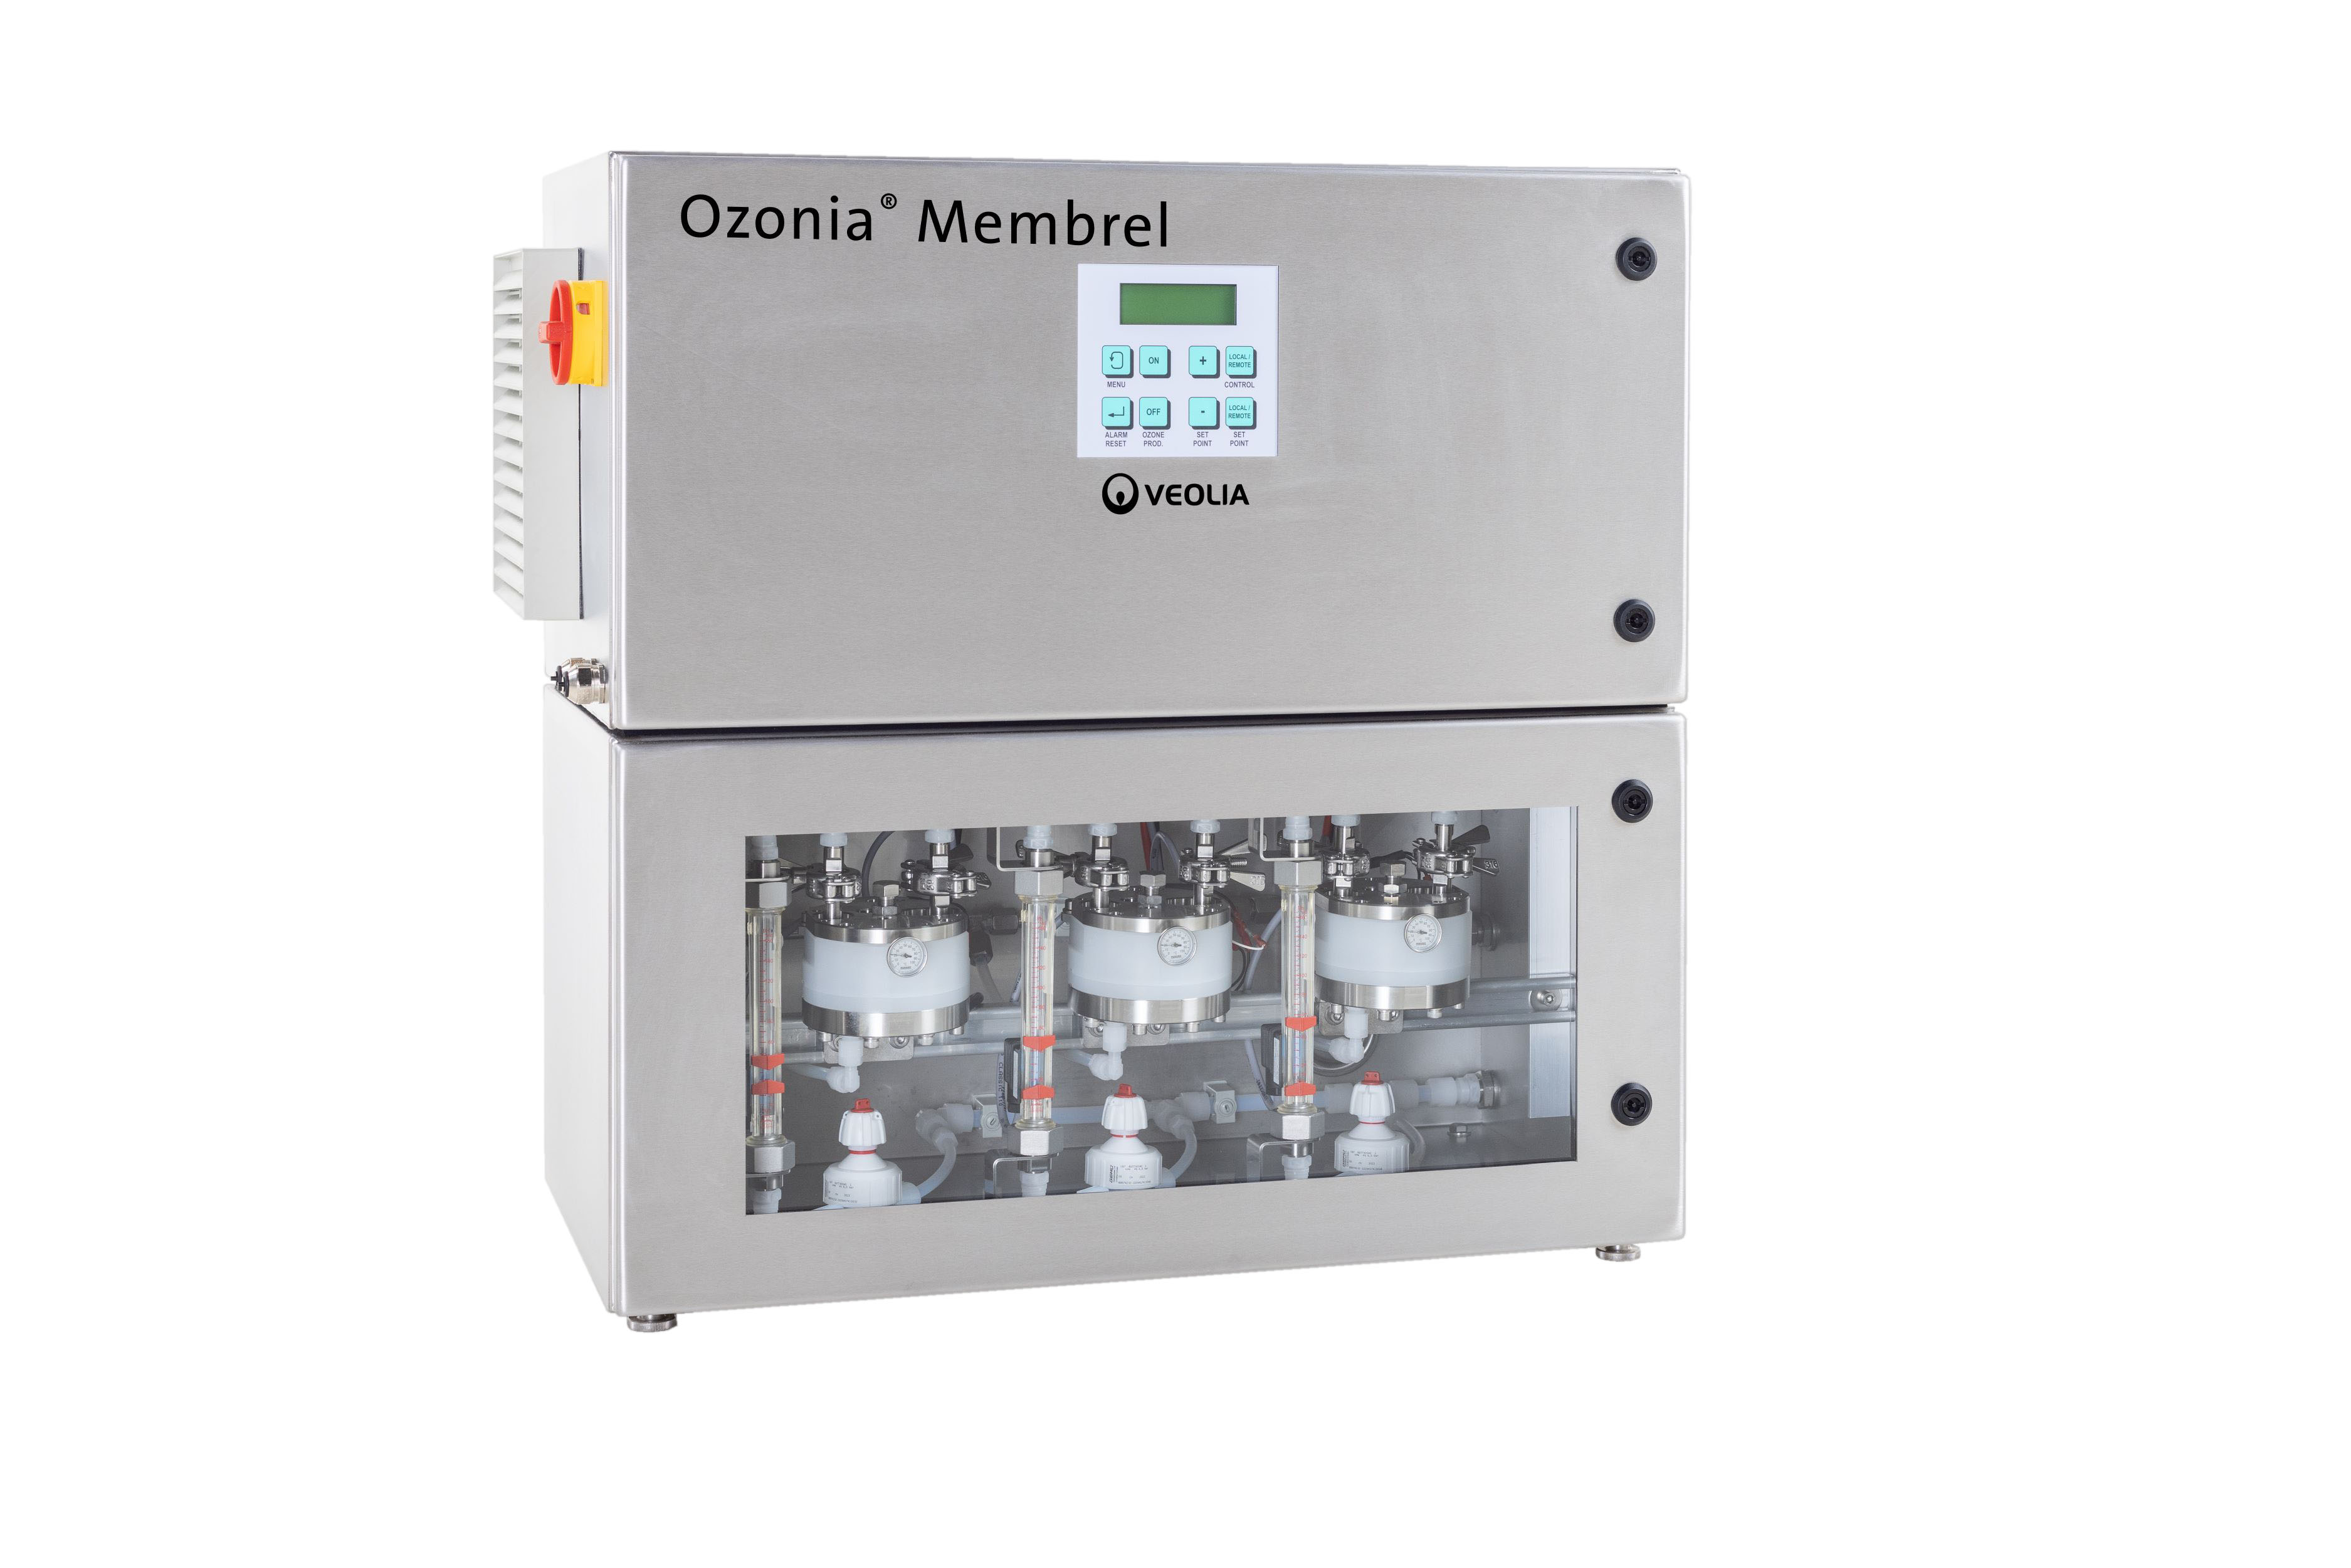 Ozonia Membrel MkV-S-1 - Electrolytic ozone generator, ozone output 3-4 g/h, system unit